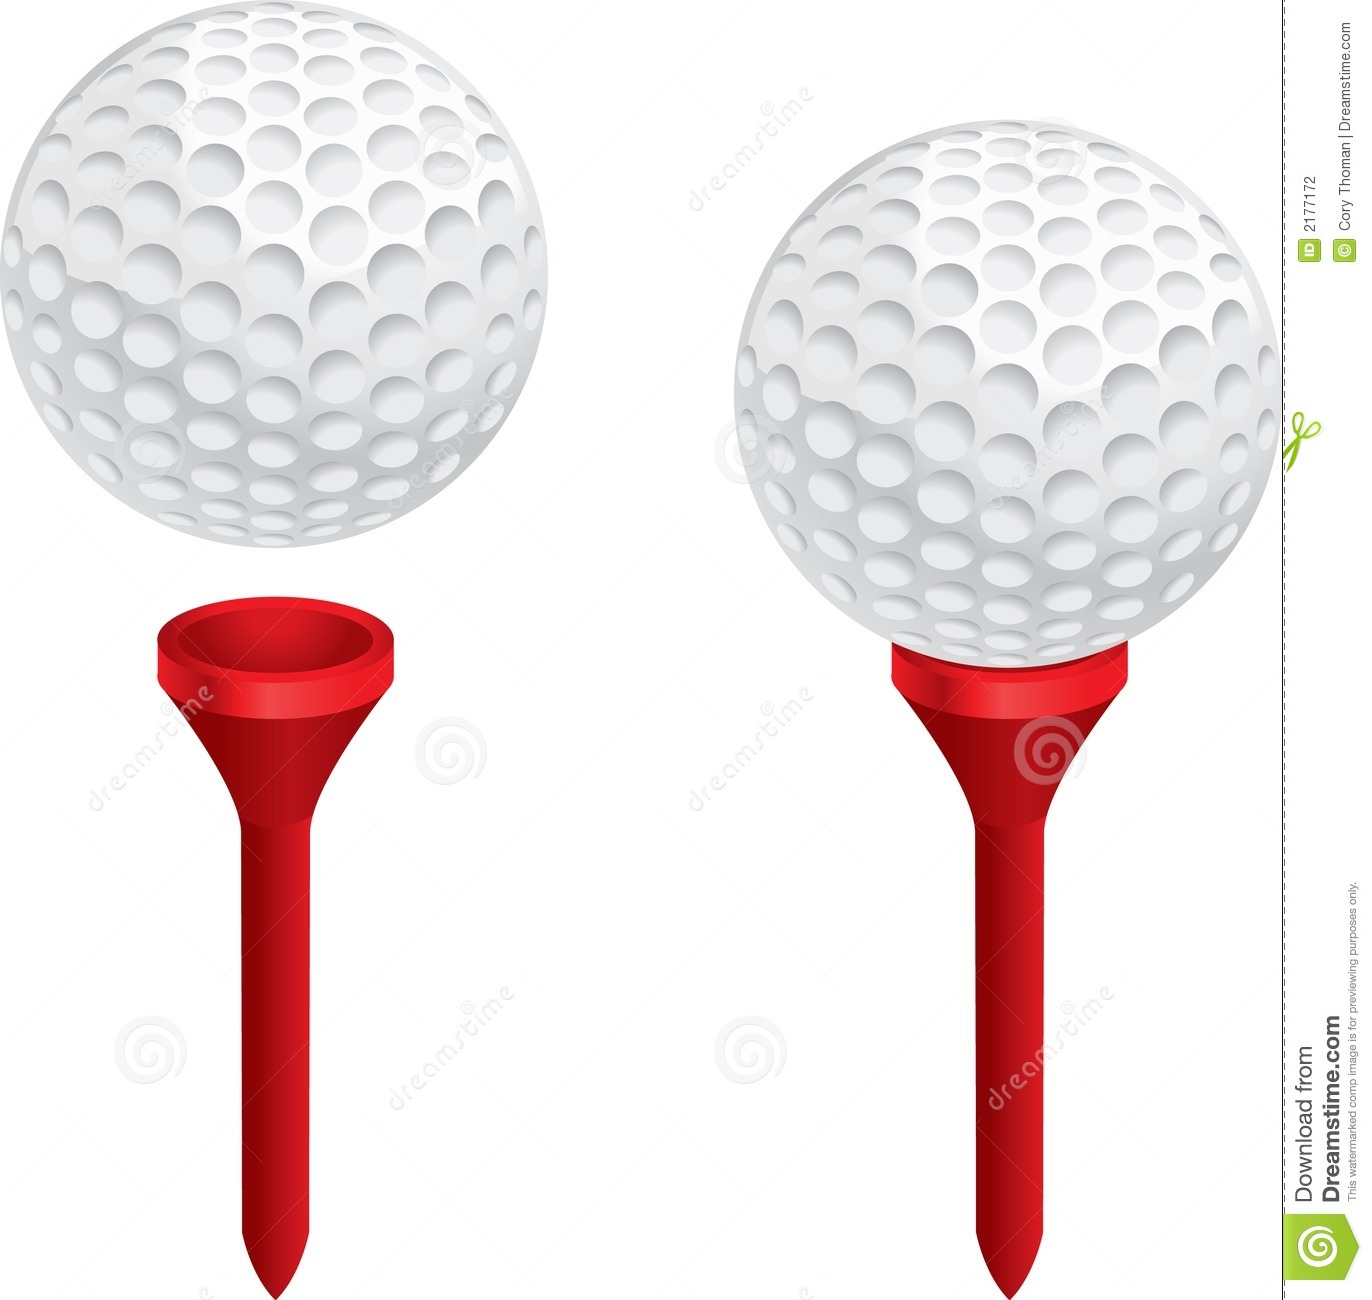 ... Golf Ball On Tee Clipart thumbs.dreamstime clipartall.com